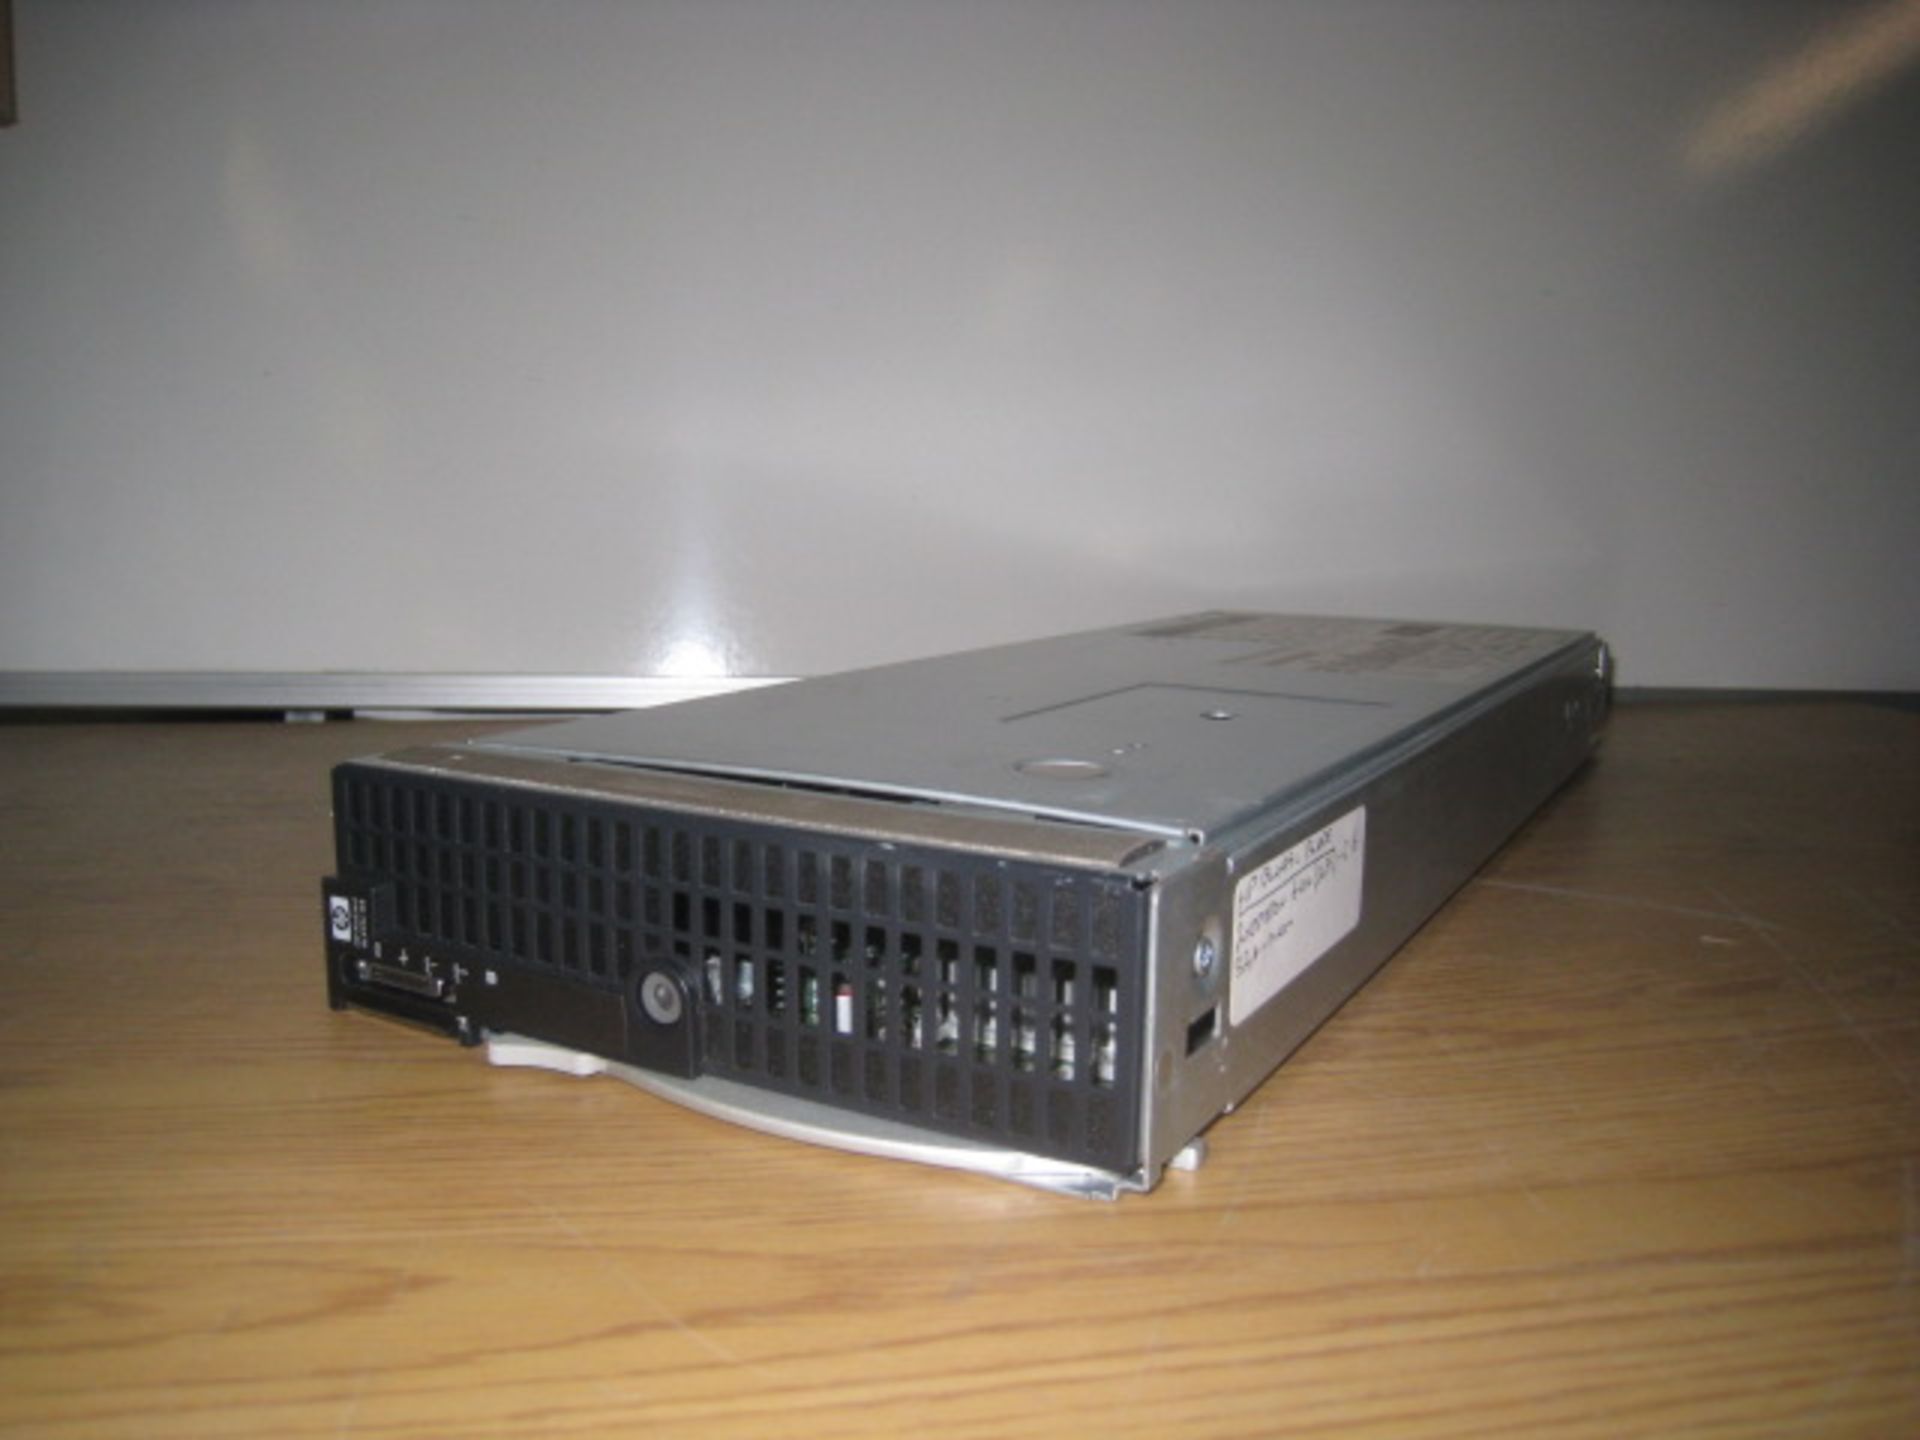 HP PROLIANT BL495c G6 SERVER BLADE. 2 X OPTERON SIX CORE 2.6GHZ (2435) PROCESSORS & 32GB RAM.